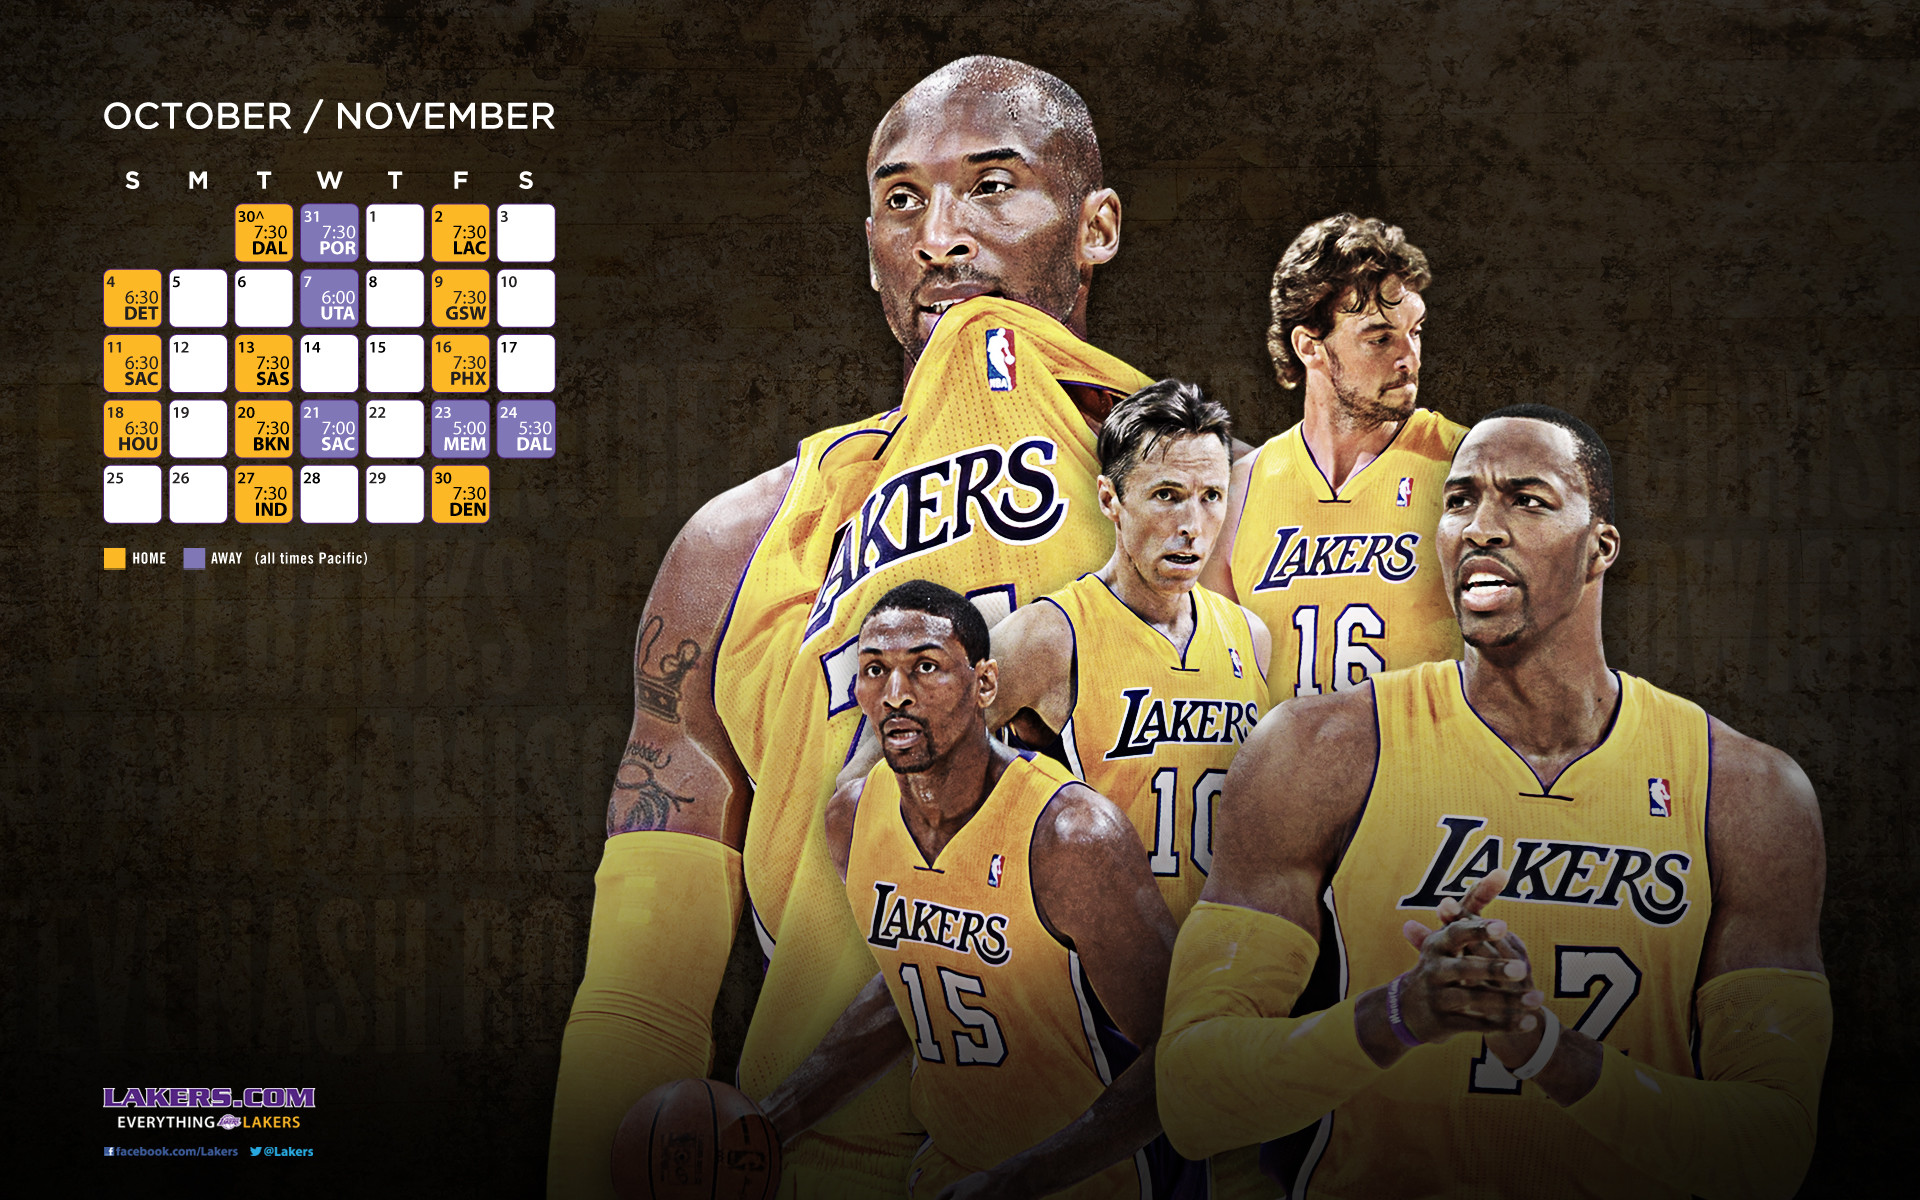 Los Angeles Lakers Big 4 2560×1440 Wallpaper